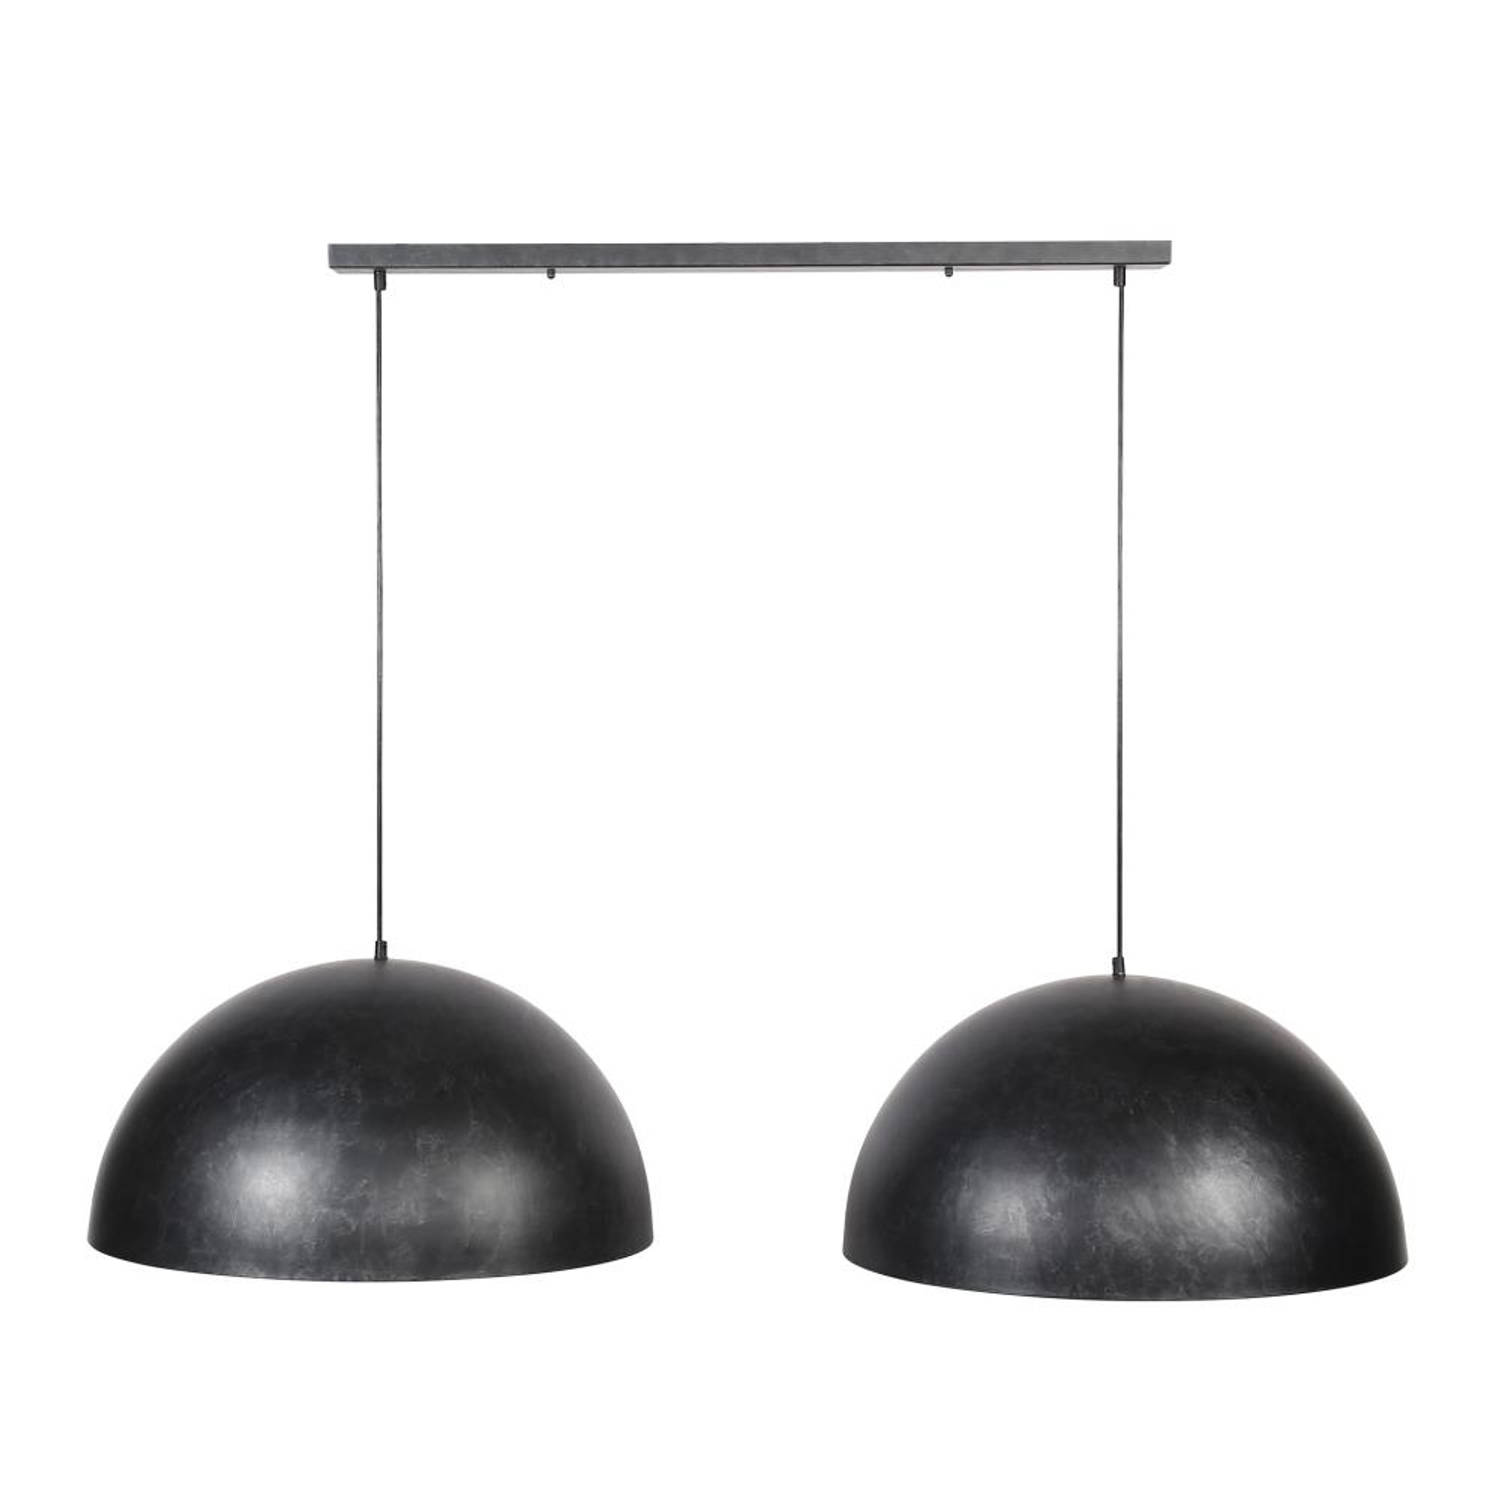 Giga Meubel Gm Hanglamp 2-lichts Charcoal - Metaal - Ø60cm - Lamp Dome